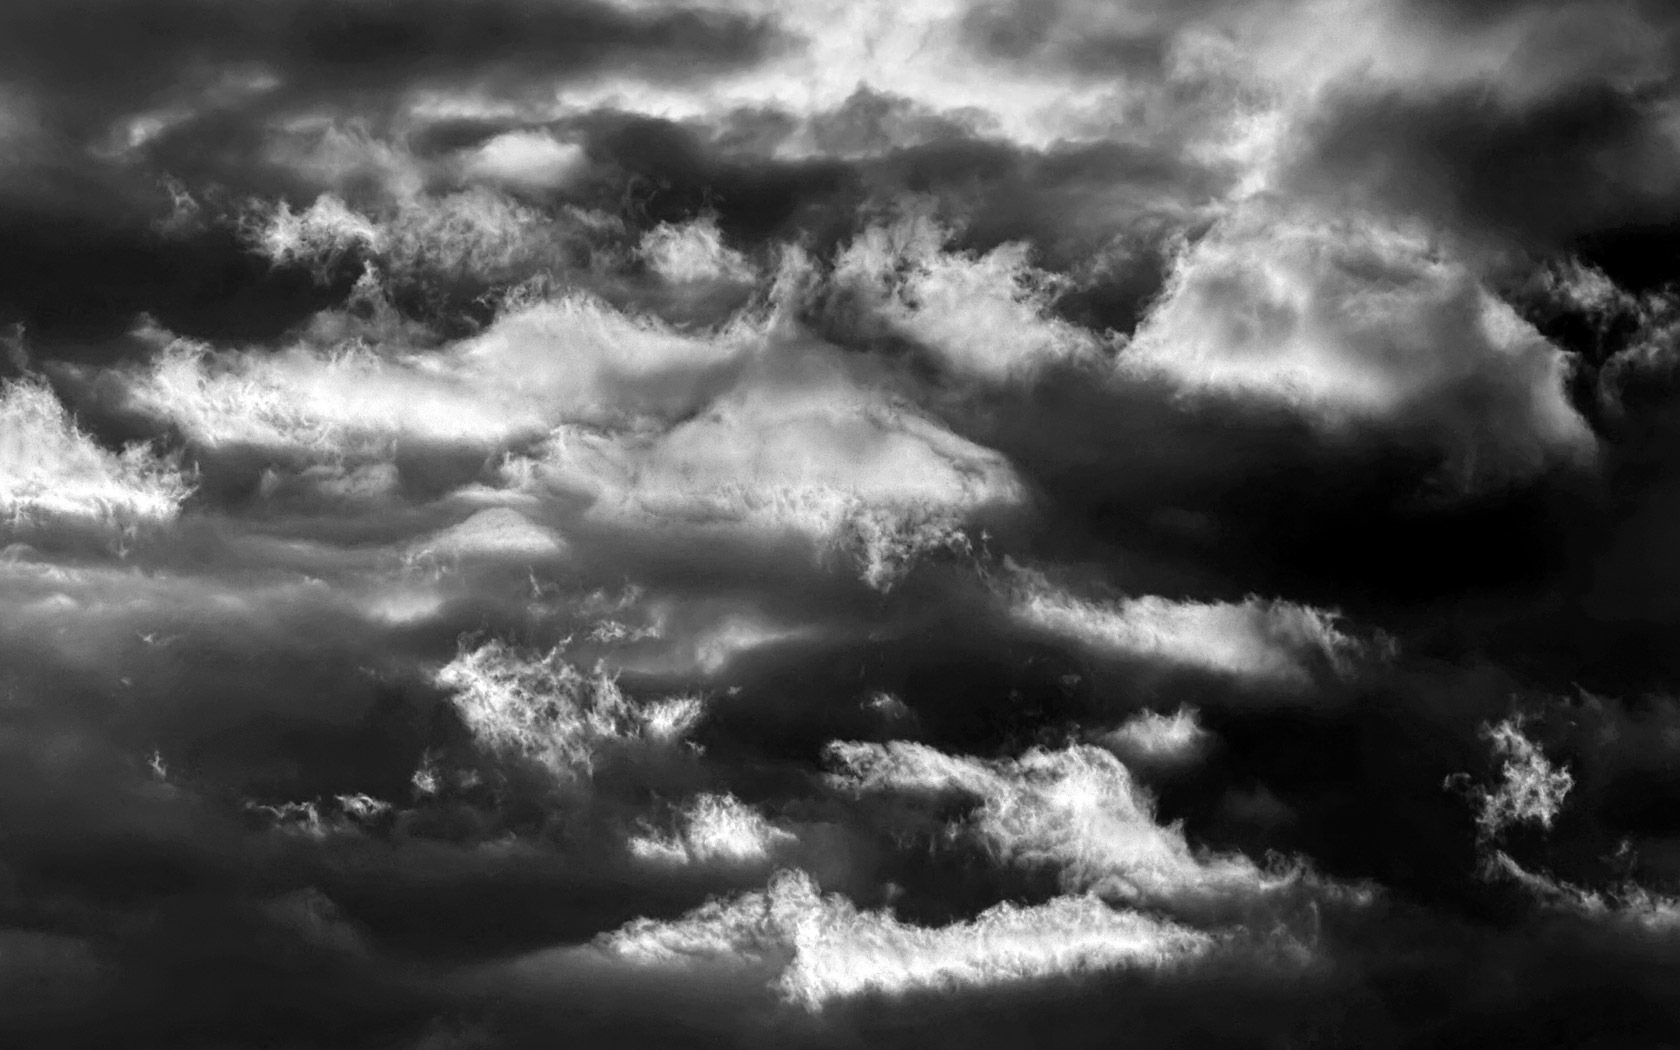 Storm Cloud Wallpaper backgrounds 48795 HD Pictures